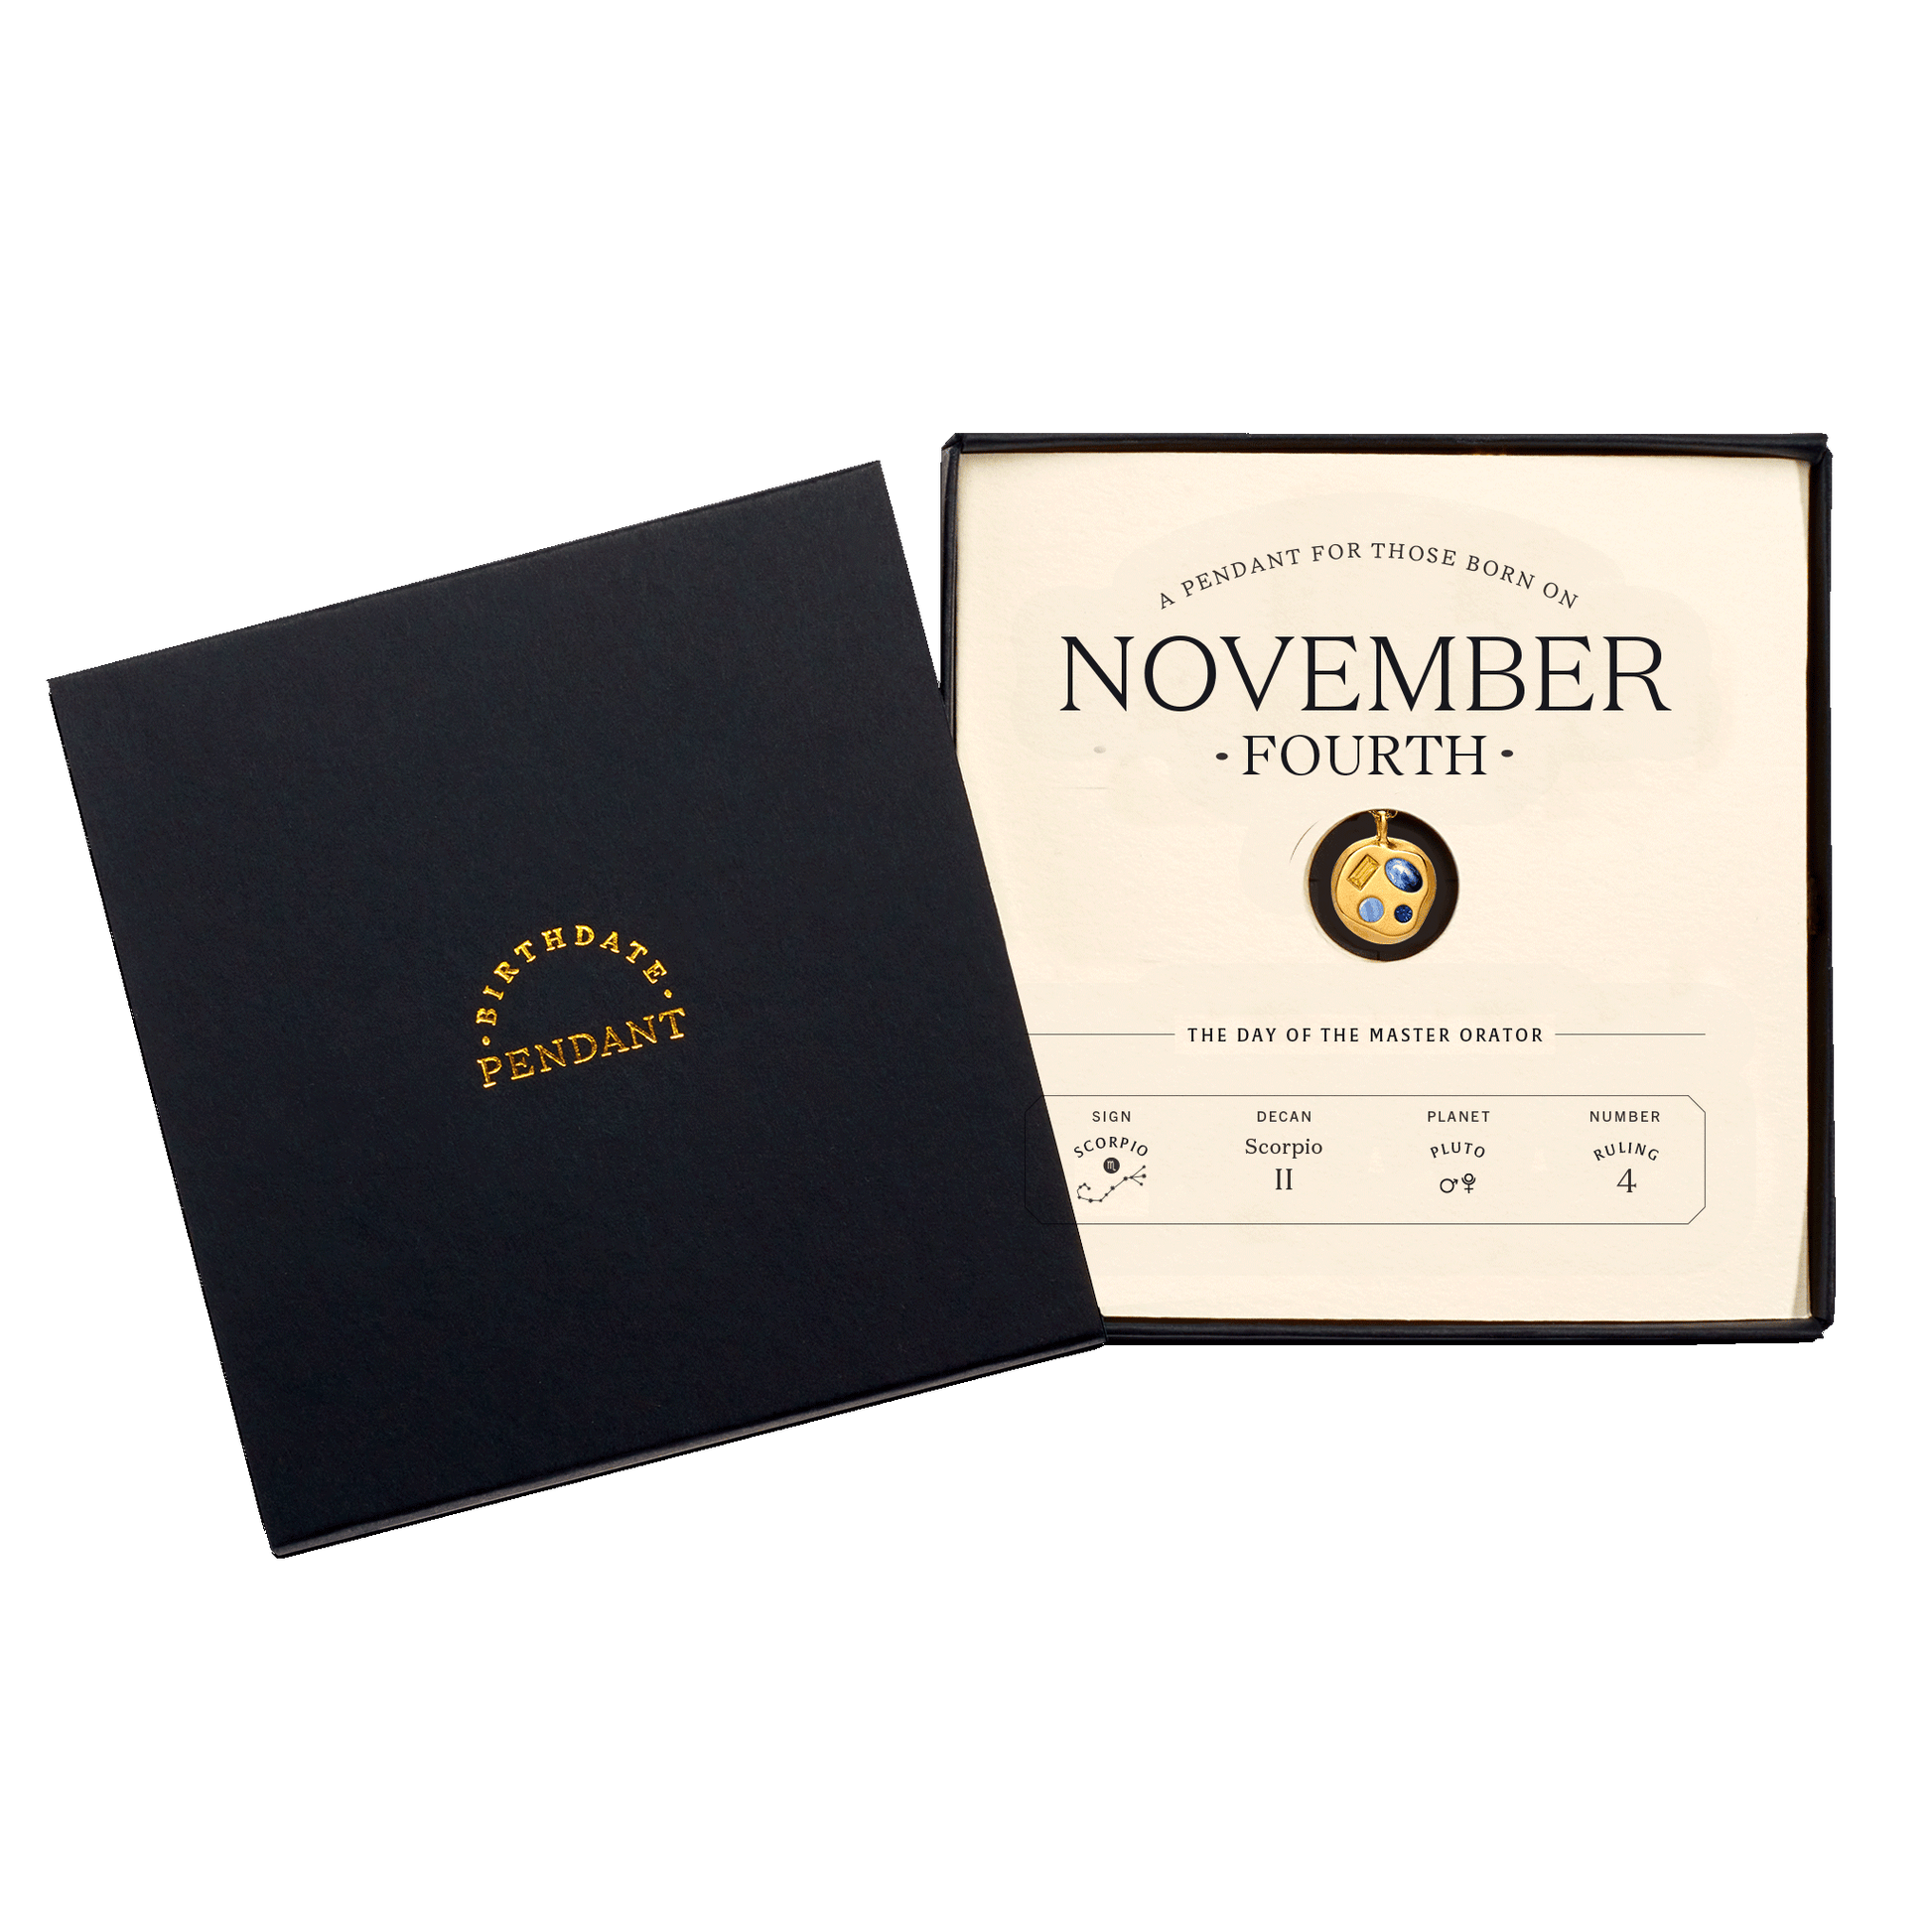 The November Fourth Pendant inside its box